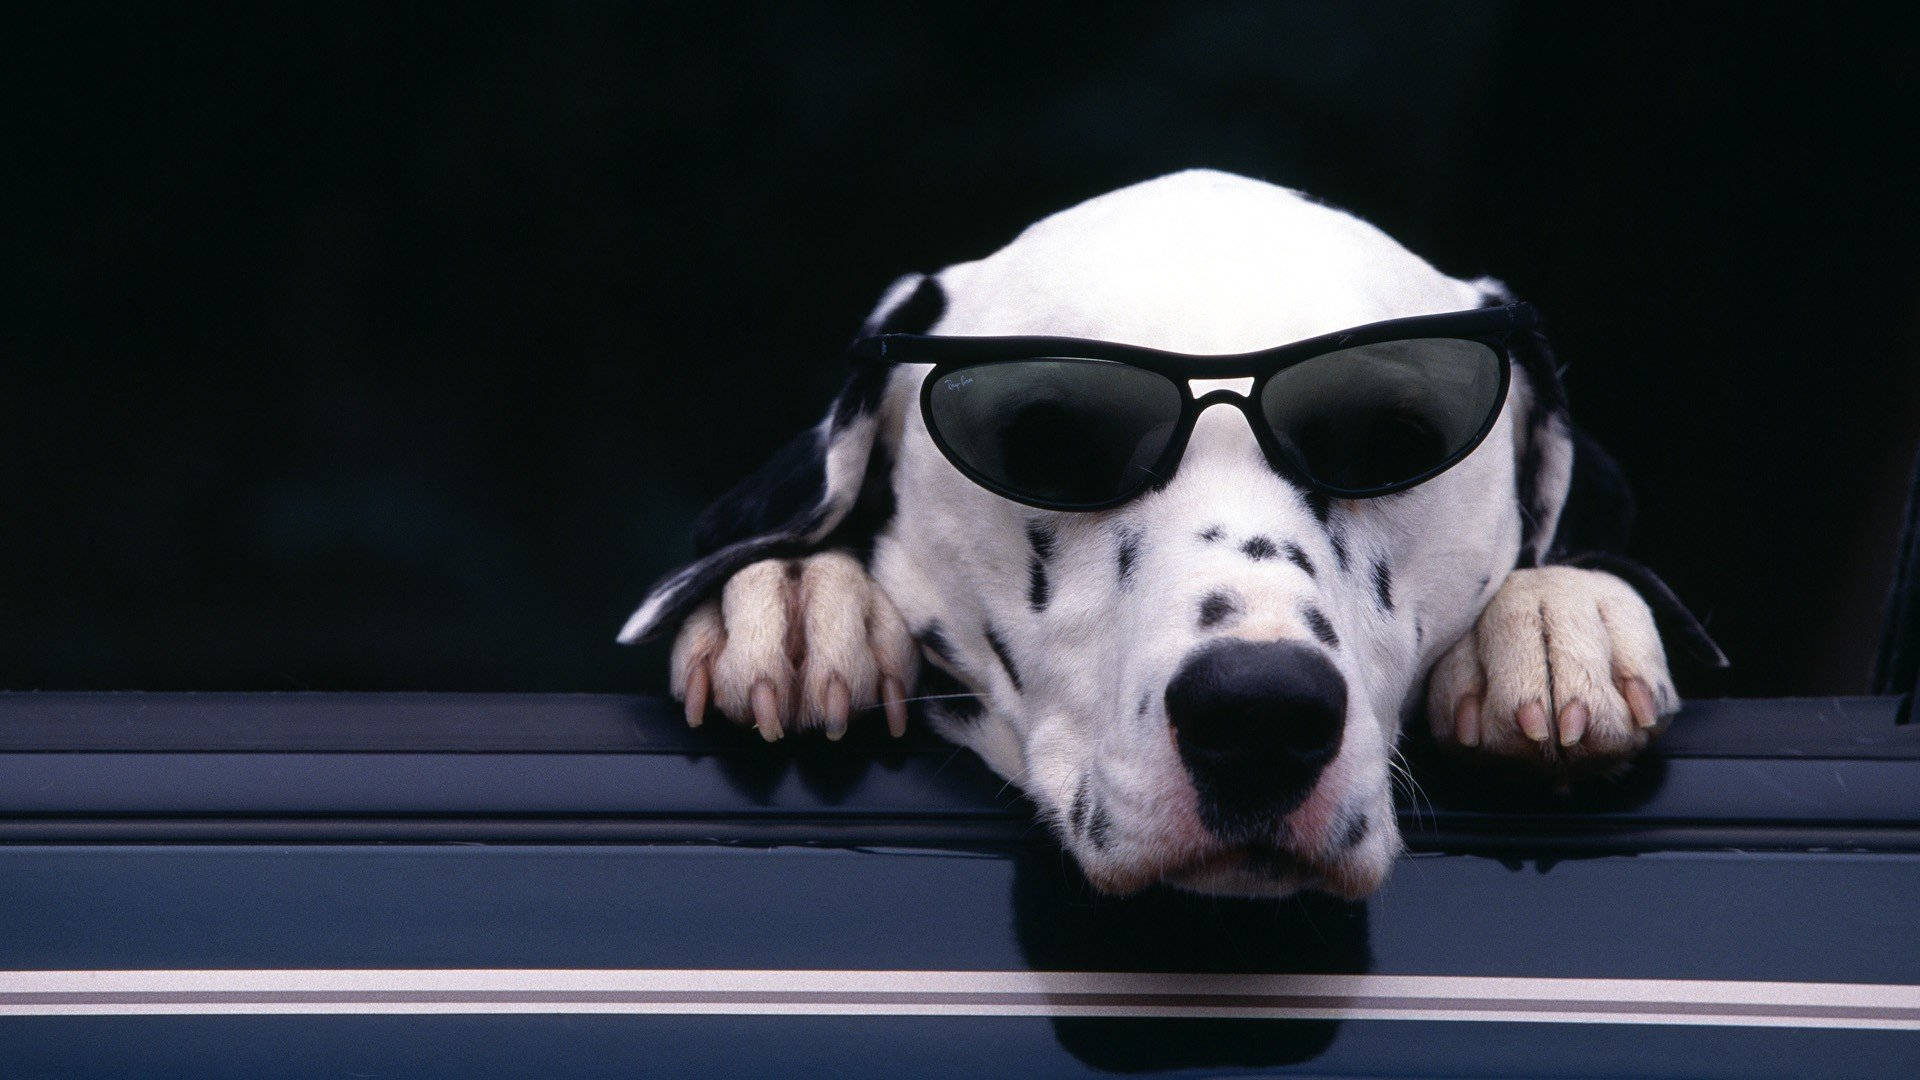 Dalmatian In Sunglasses